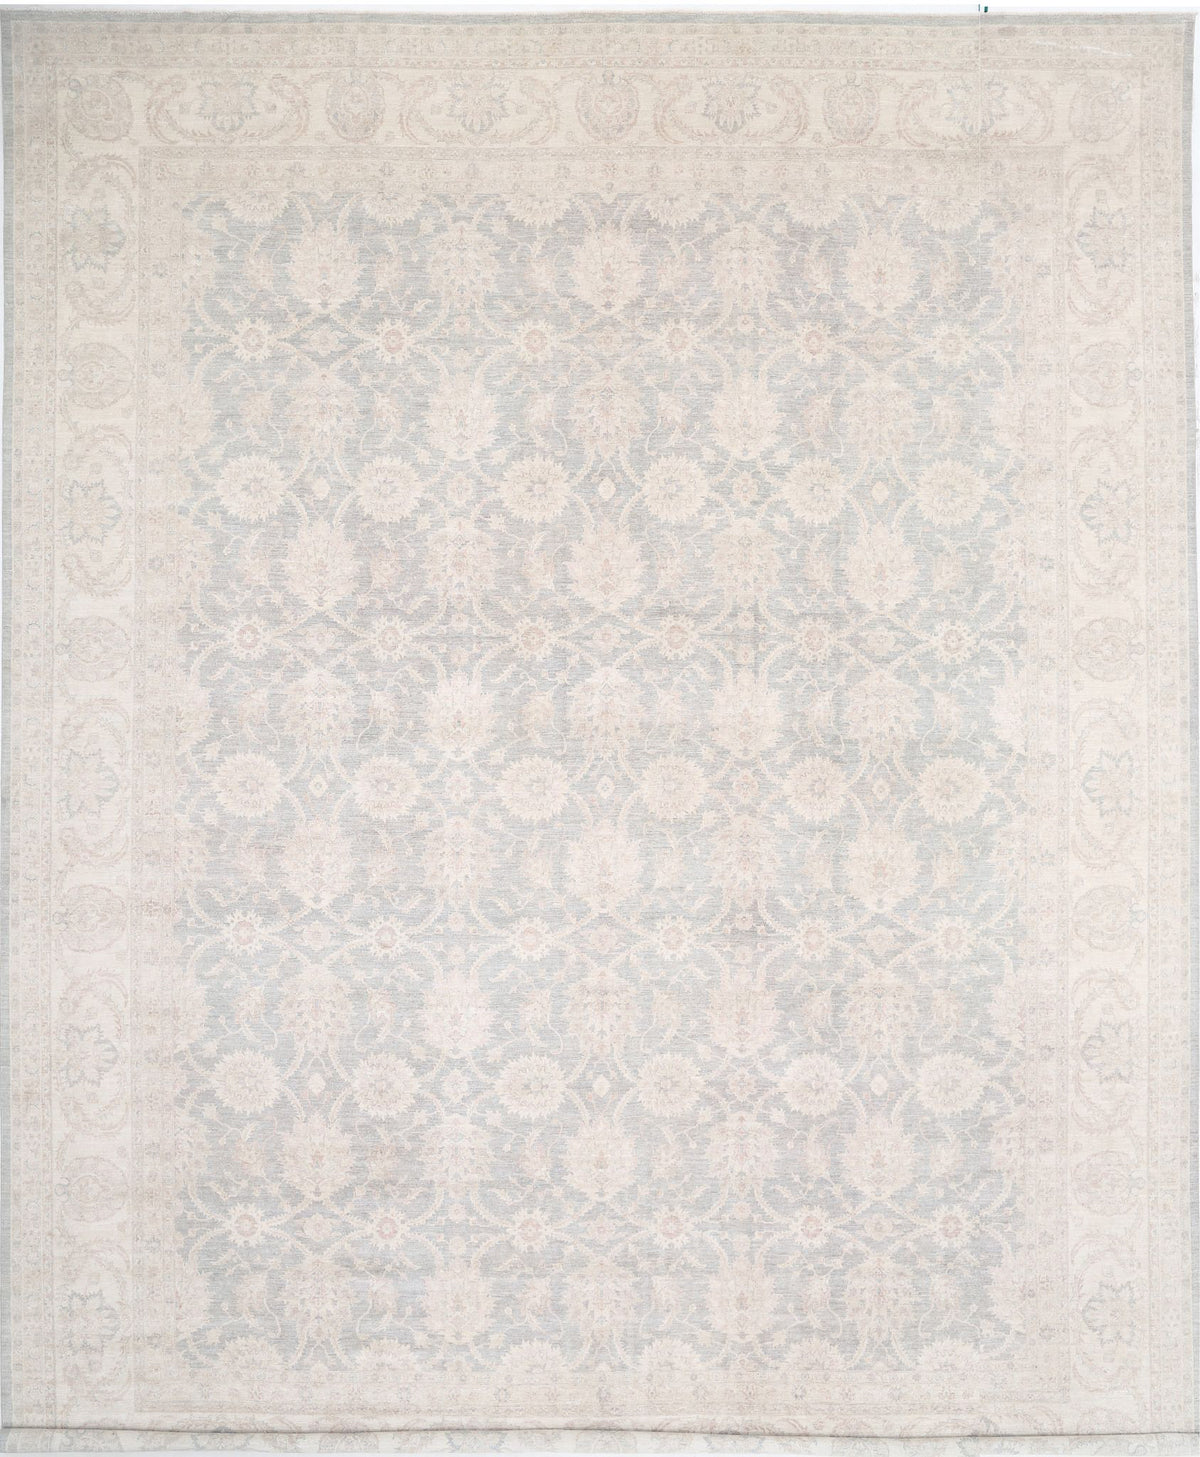 Serenity-hand-knotted-tabriz-wool-rug-5017531.jpg